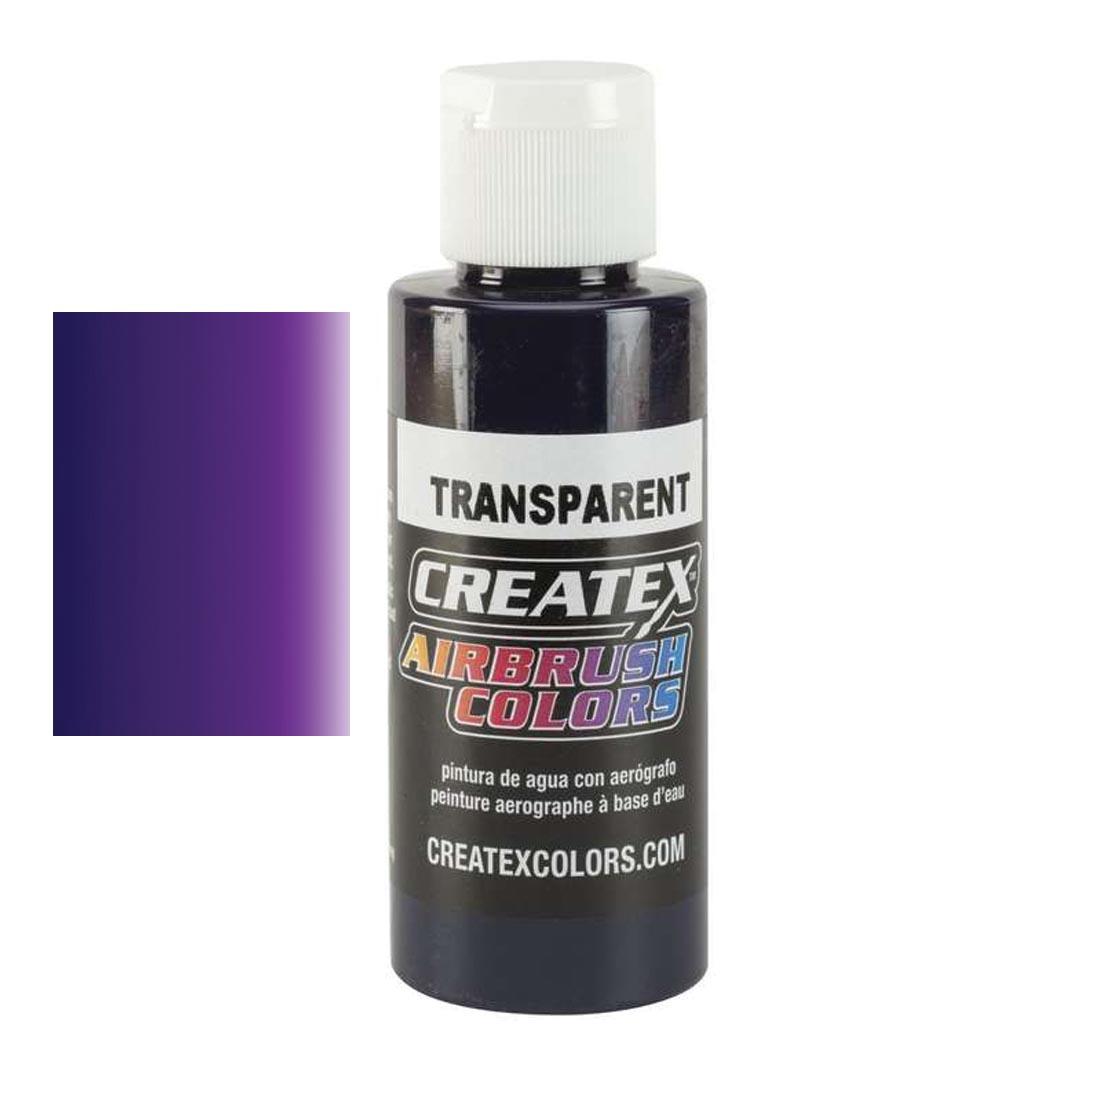 Bottle of Createx Airbrush Color Beside Transparent Violet Color Swatch